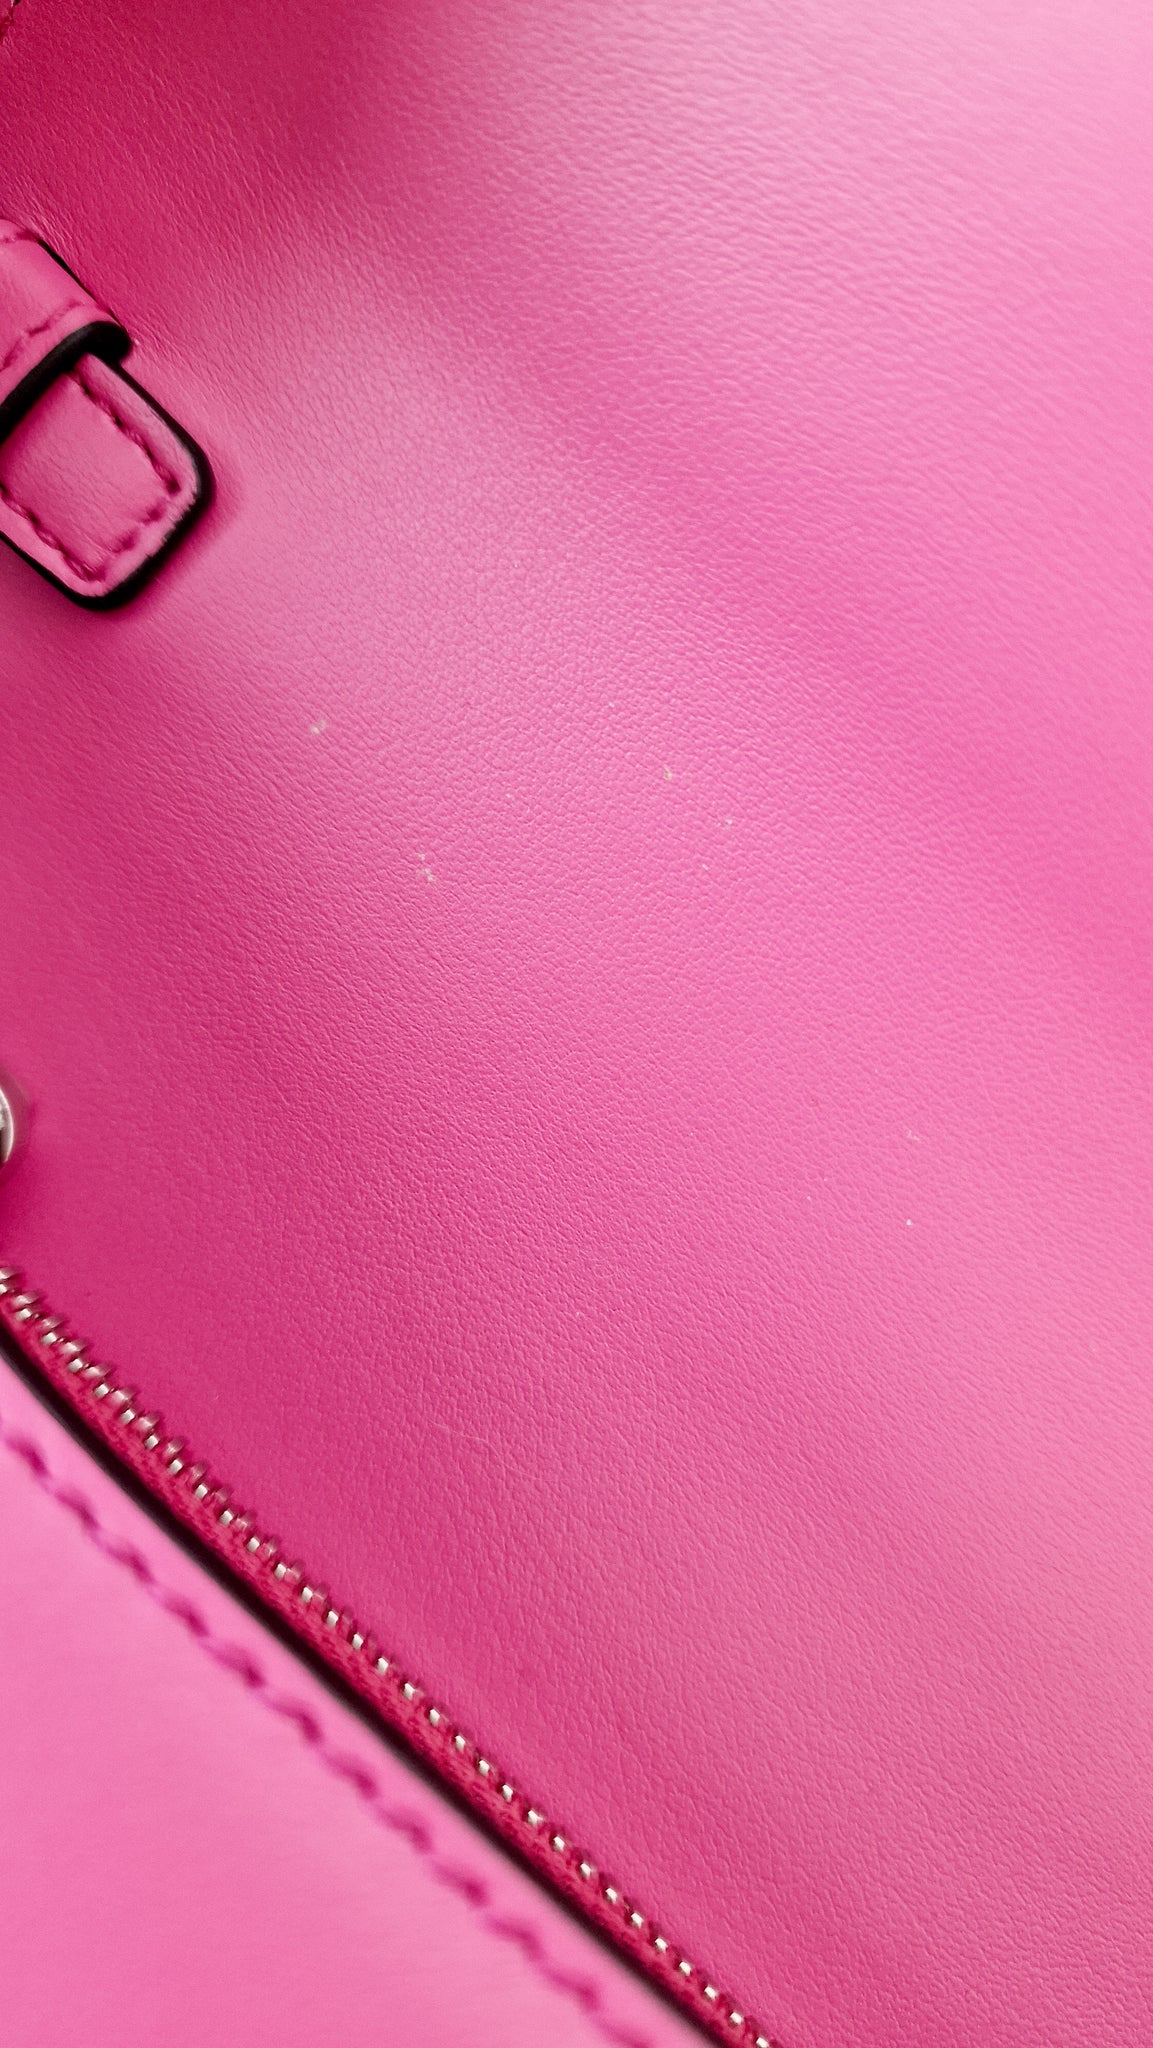 Prada Elektra Crossbody Shoulder Bag in Pink Saffiano Leather